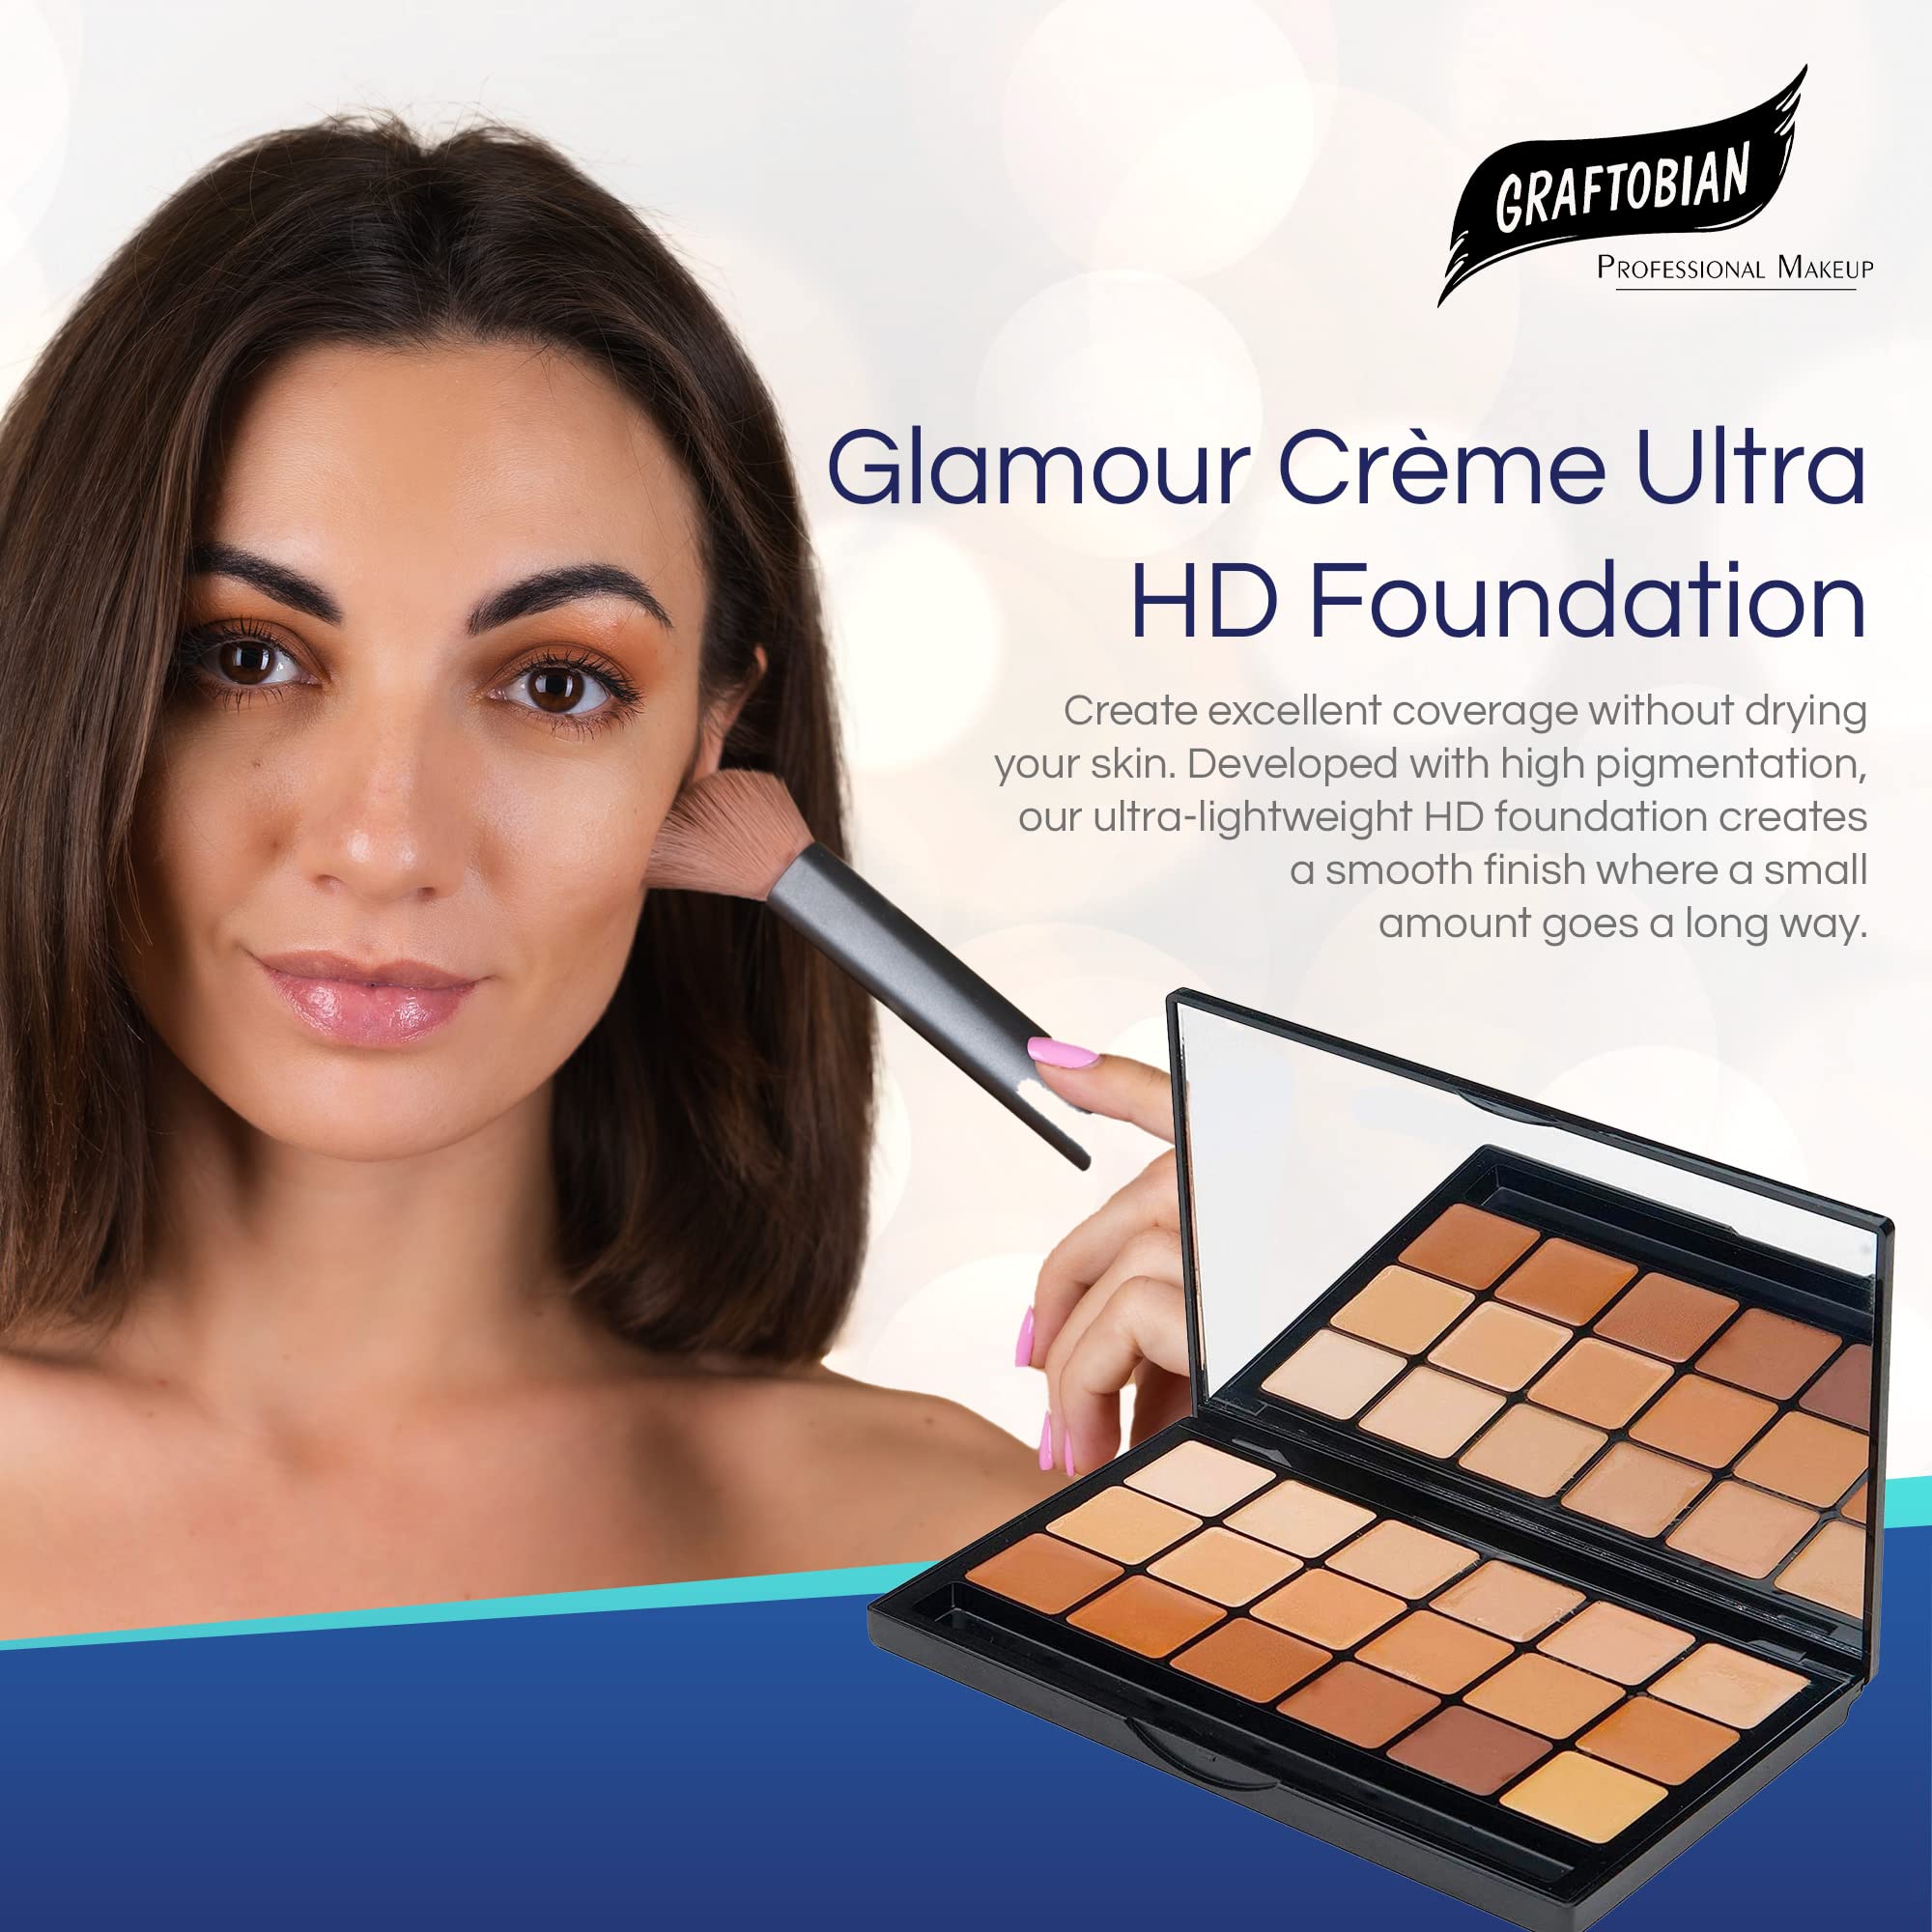 Graftobian Glamour Crème Ultra HD Foundation Super Palettes - Foundation Palette, Contour Makeup, Foundation for Professional Makeup Kit, Face Makeup for Full Coverage - Warm Color